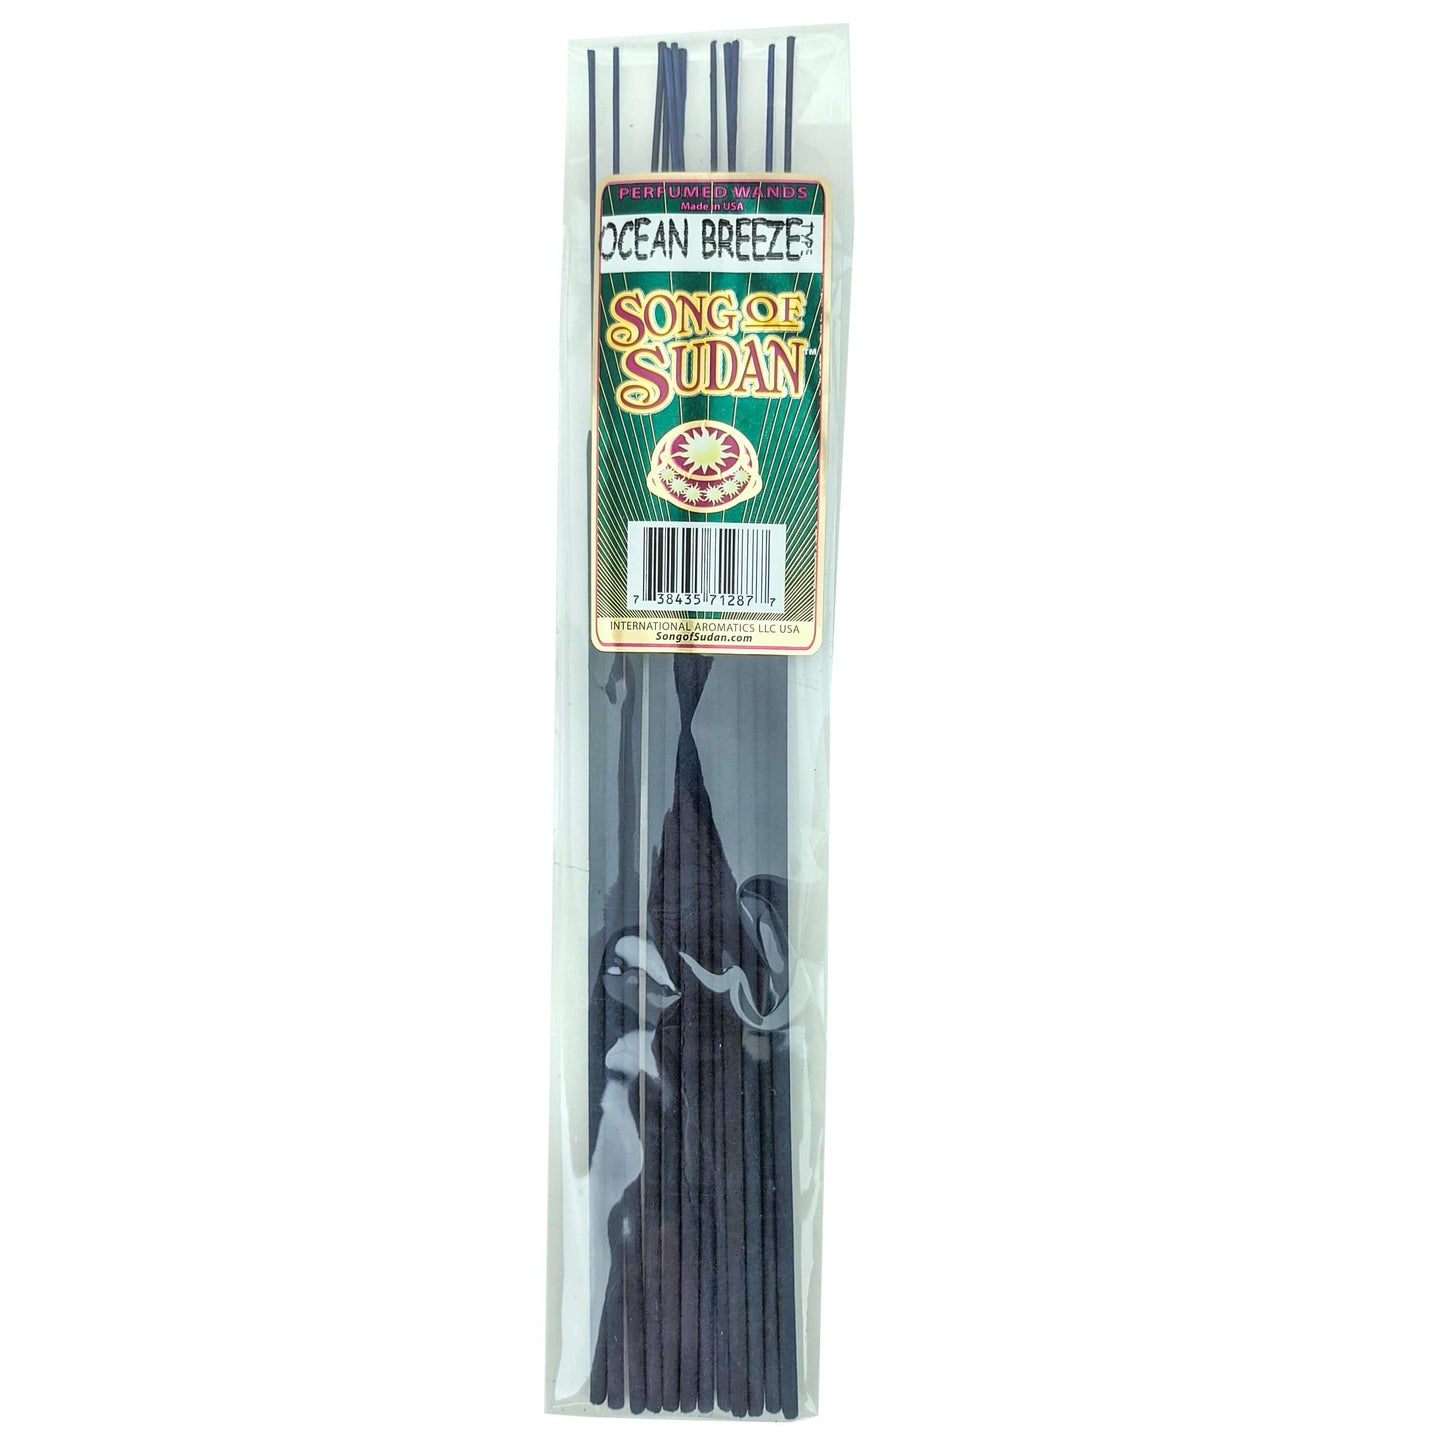 Song Of Sudan Handmade 11" Incense Sticks - Ocean Breeze Type Scent - 12 Sticks